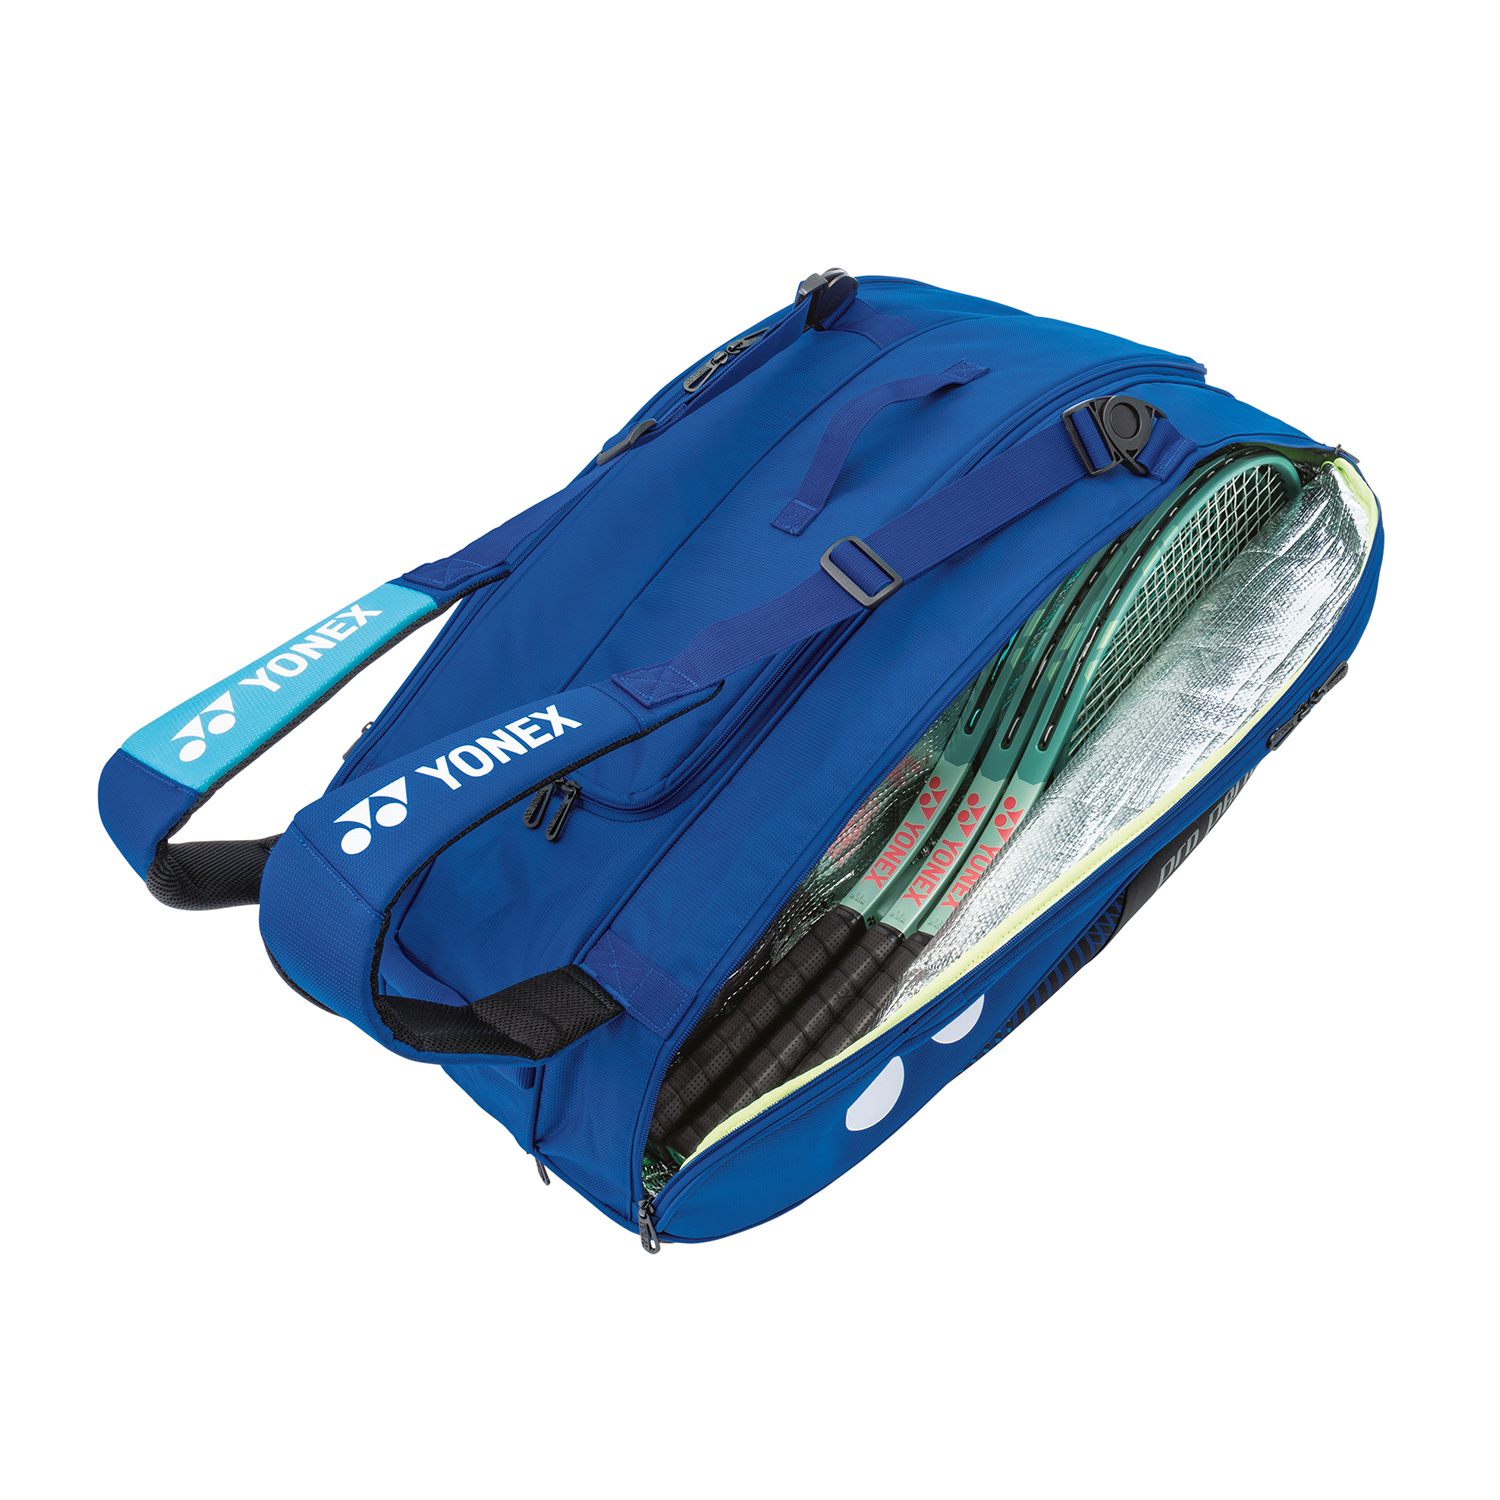 Yonex Bag Pro x 9 Bolsas - Cobalt Blu